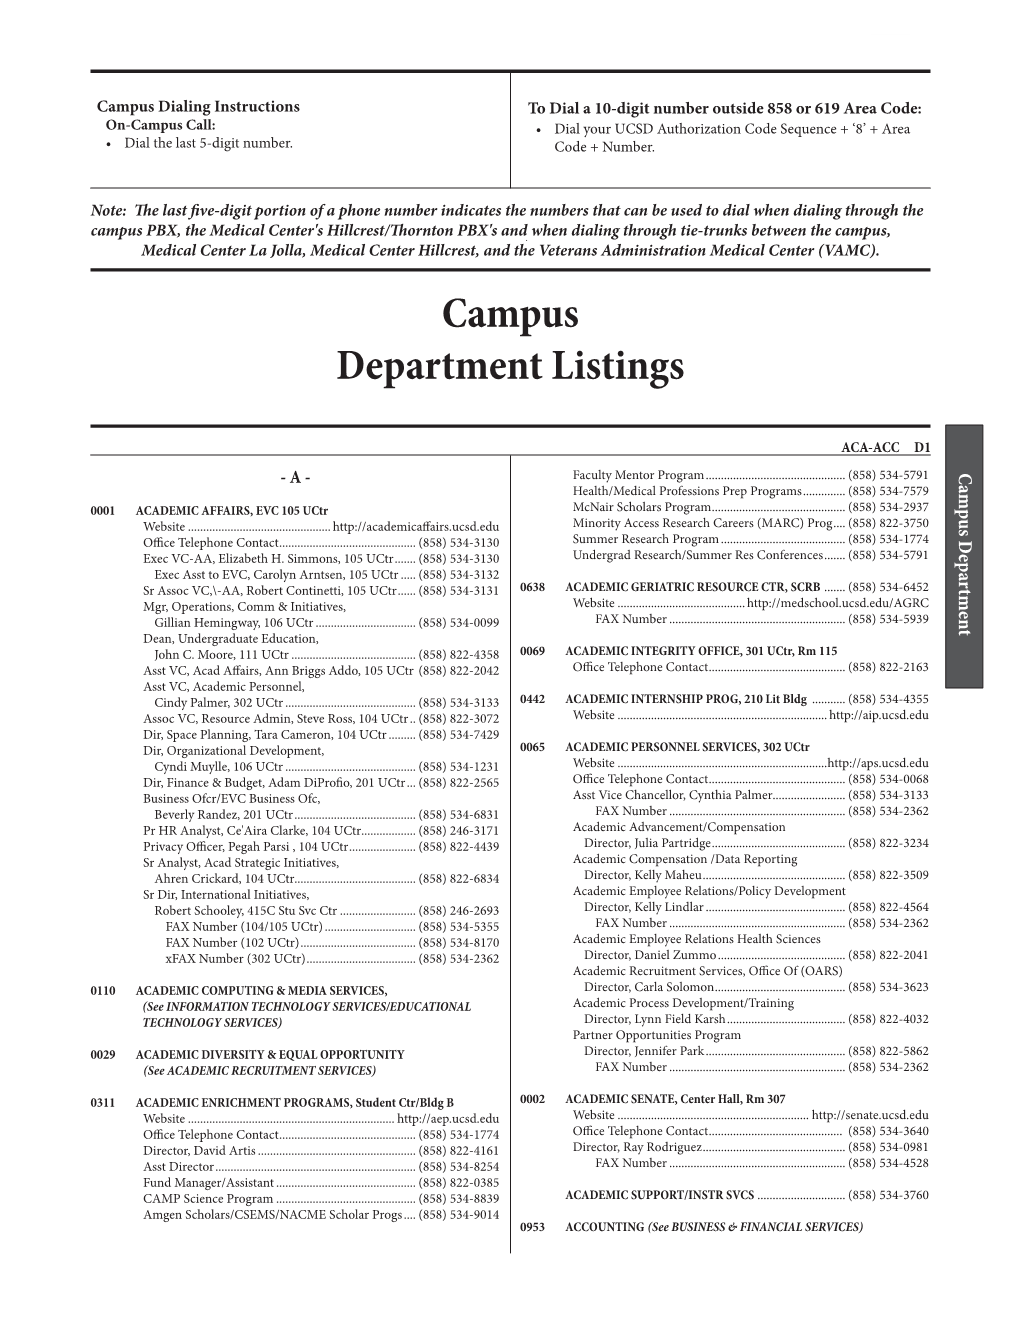 Campus Department Listings